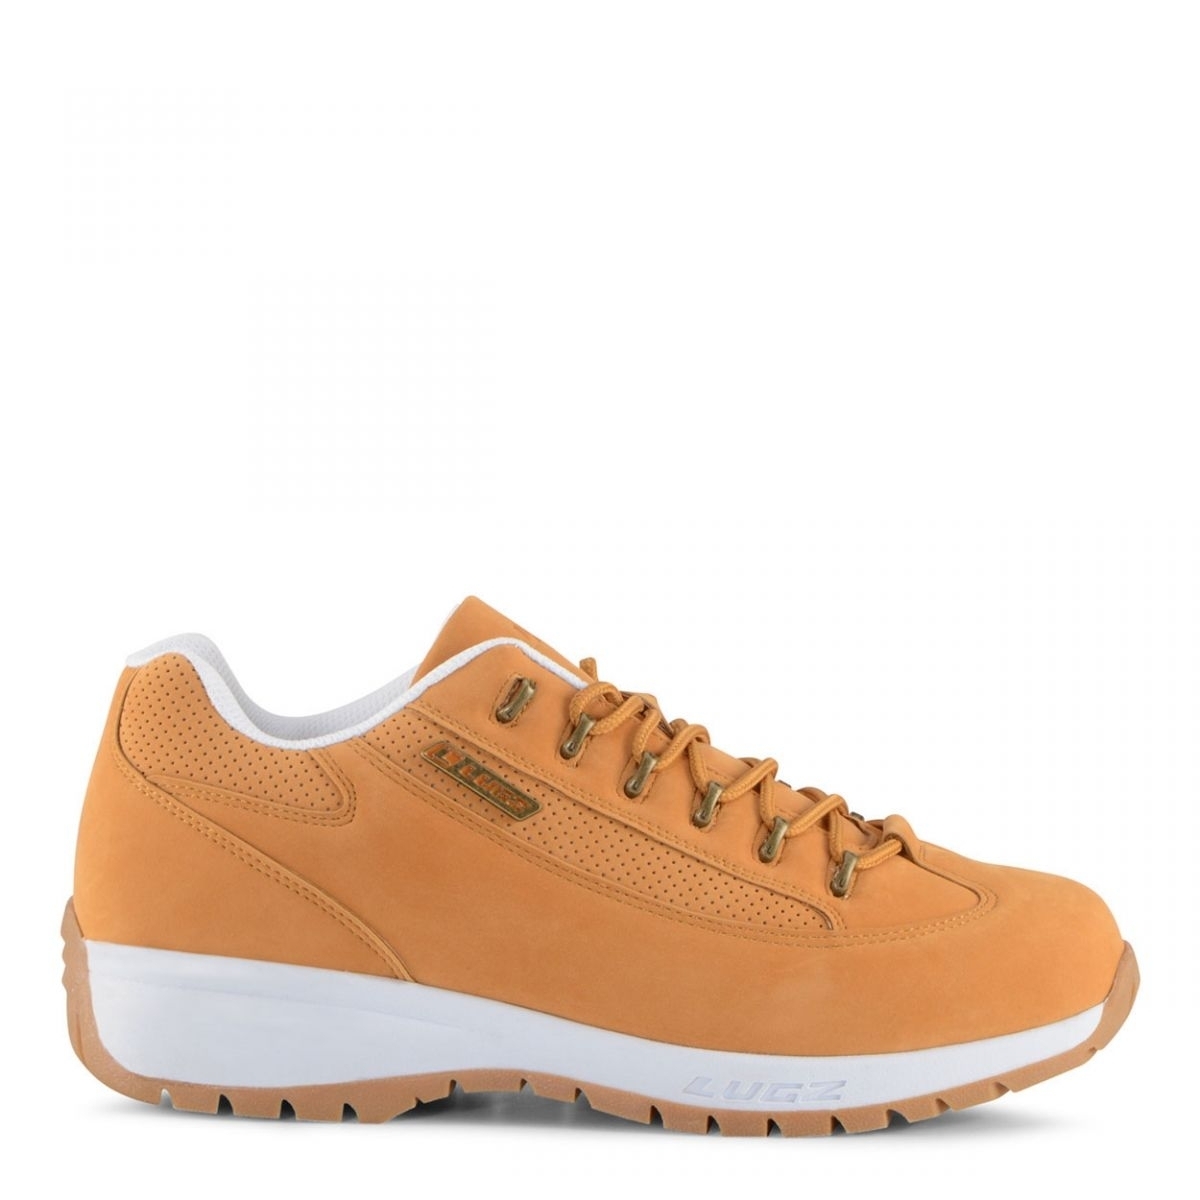 Lugz Men's Express Sneakers Golden Wheat/White - MEXPRSPK-714 Golden Wheat/White/Gum - Golden Wheat/White/Gum, 8